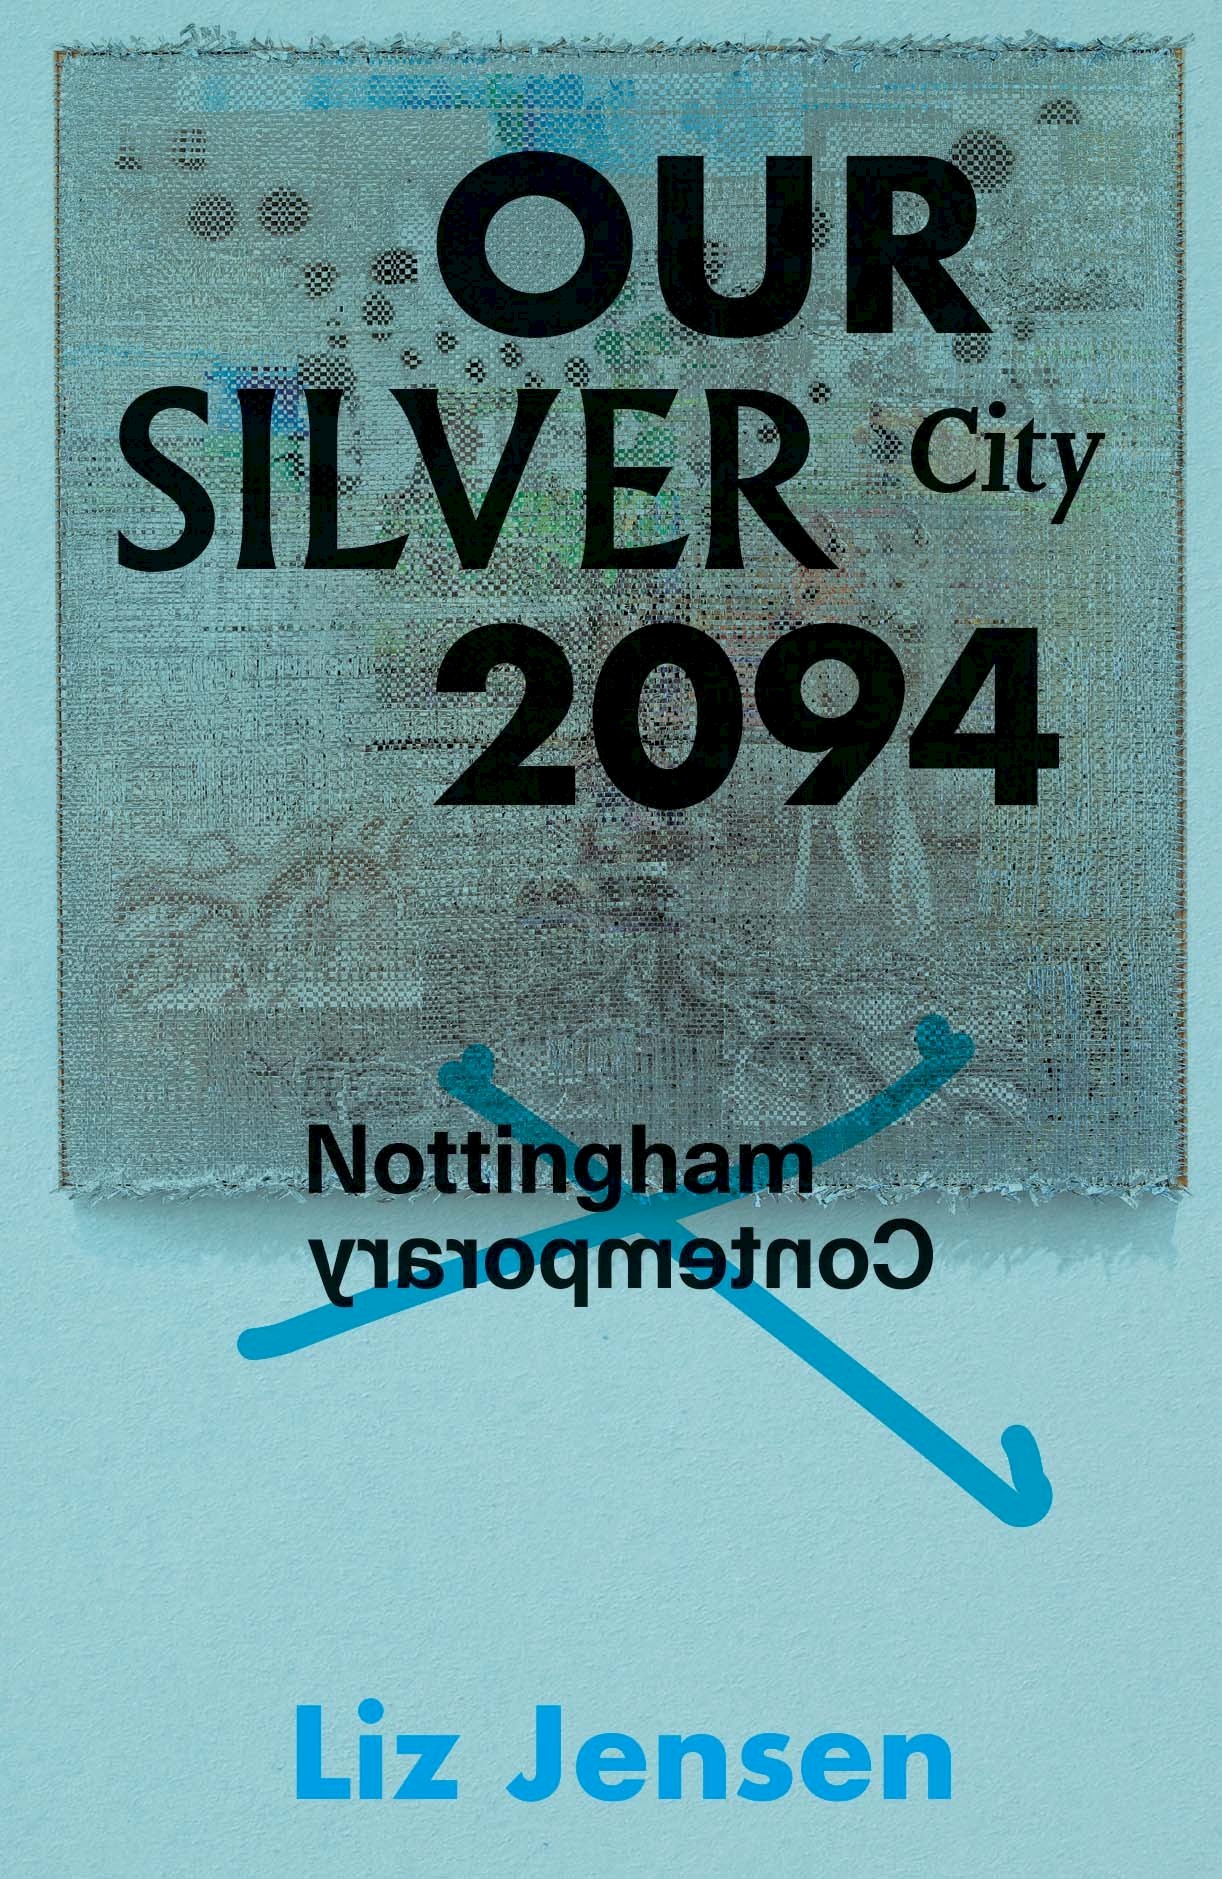 Liz Jensen novella - Our Silver City, 2094 (Accessible format) image